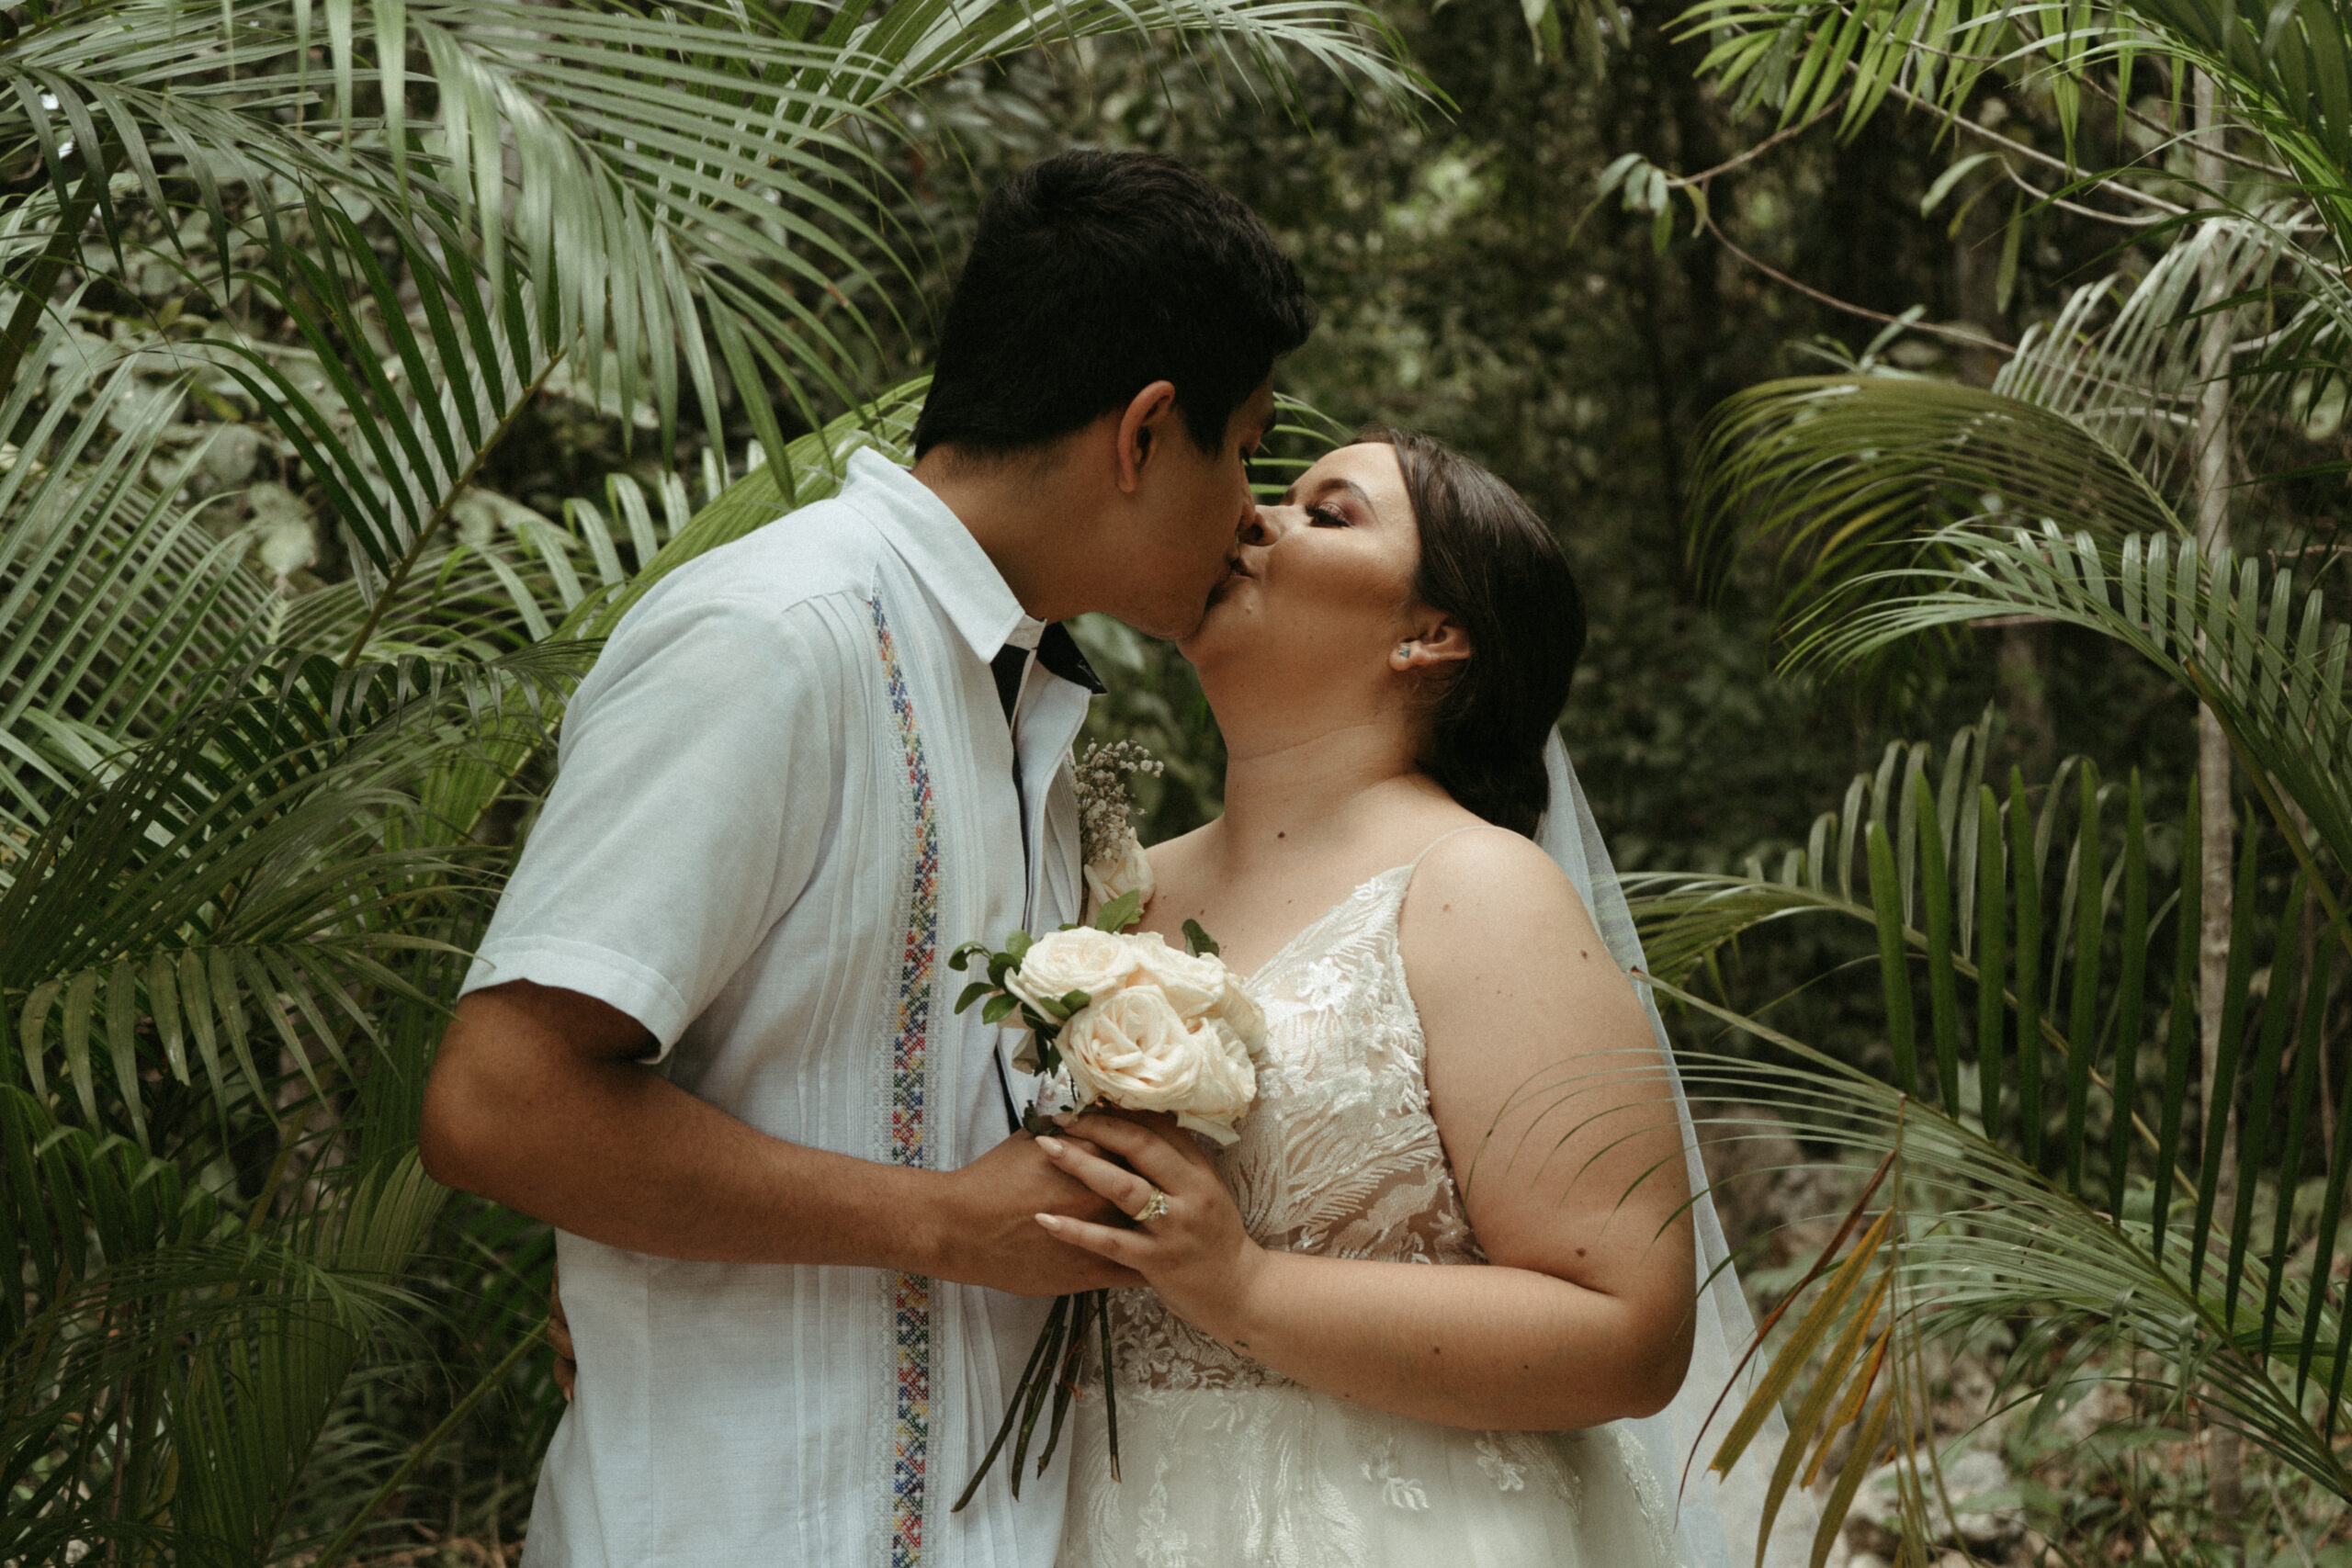 cenote elvira wedding photos17